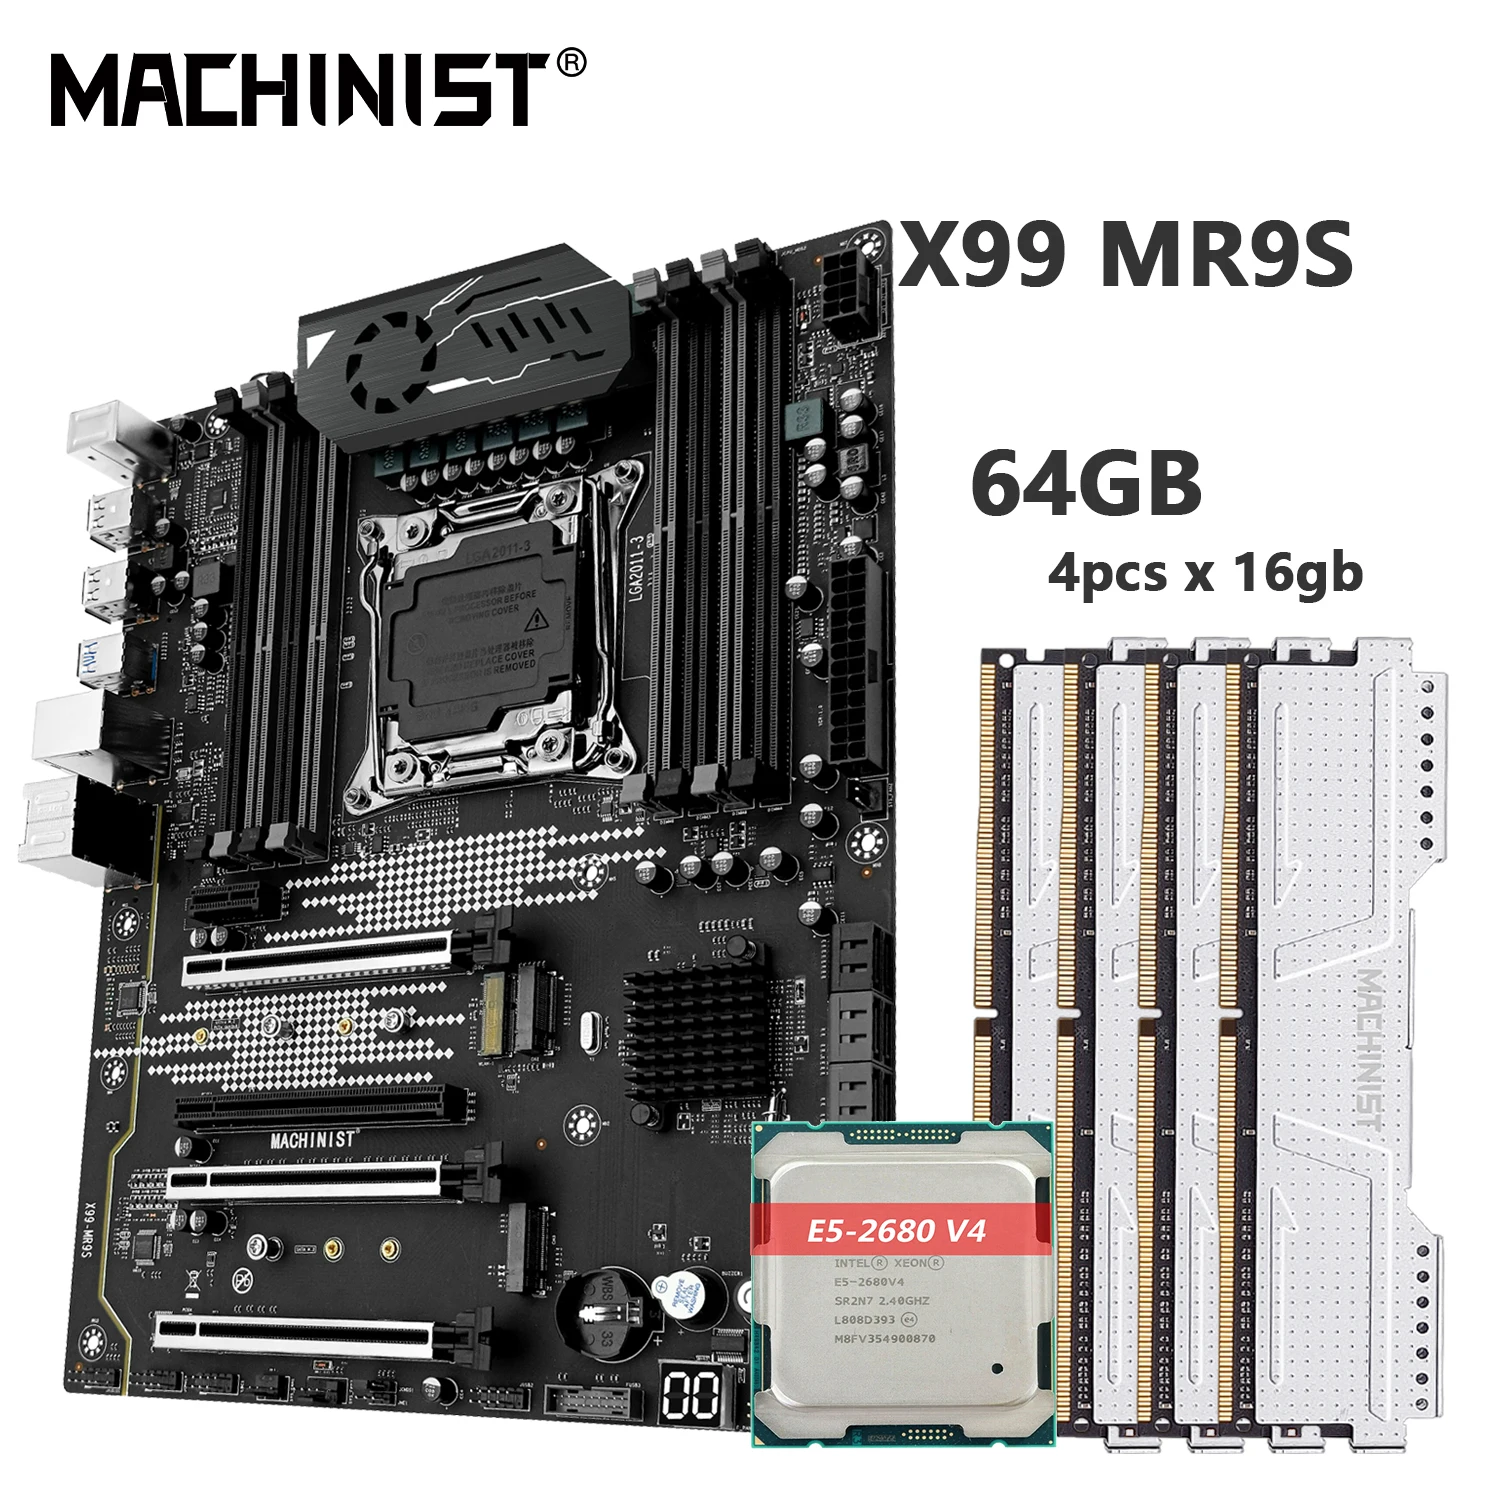 Machinsit-placa base X99 LGA 2011-3, con Intel Xeon E5 2680 V4 CPU y DDR4 64GB (4x16gb), Kit de conjunto de memoria RAM, ATX X99 MR9S